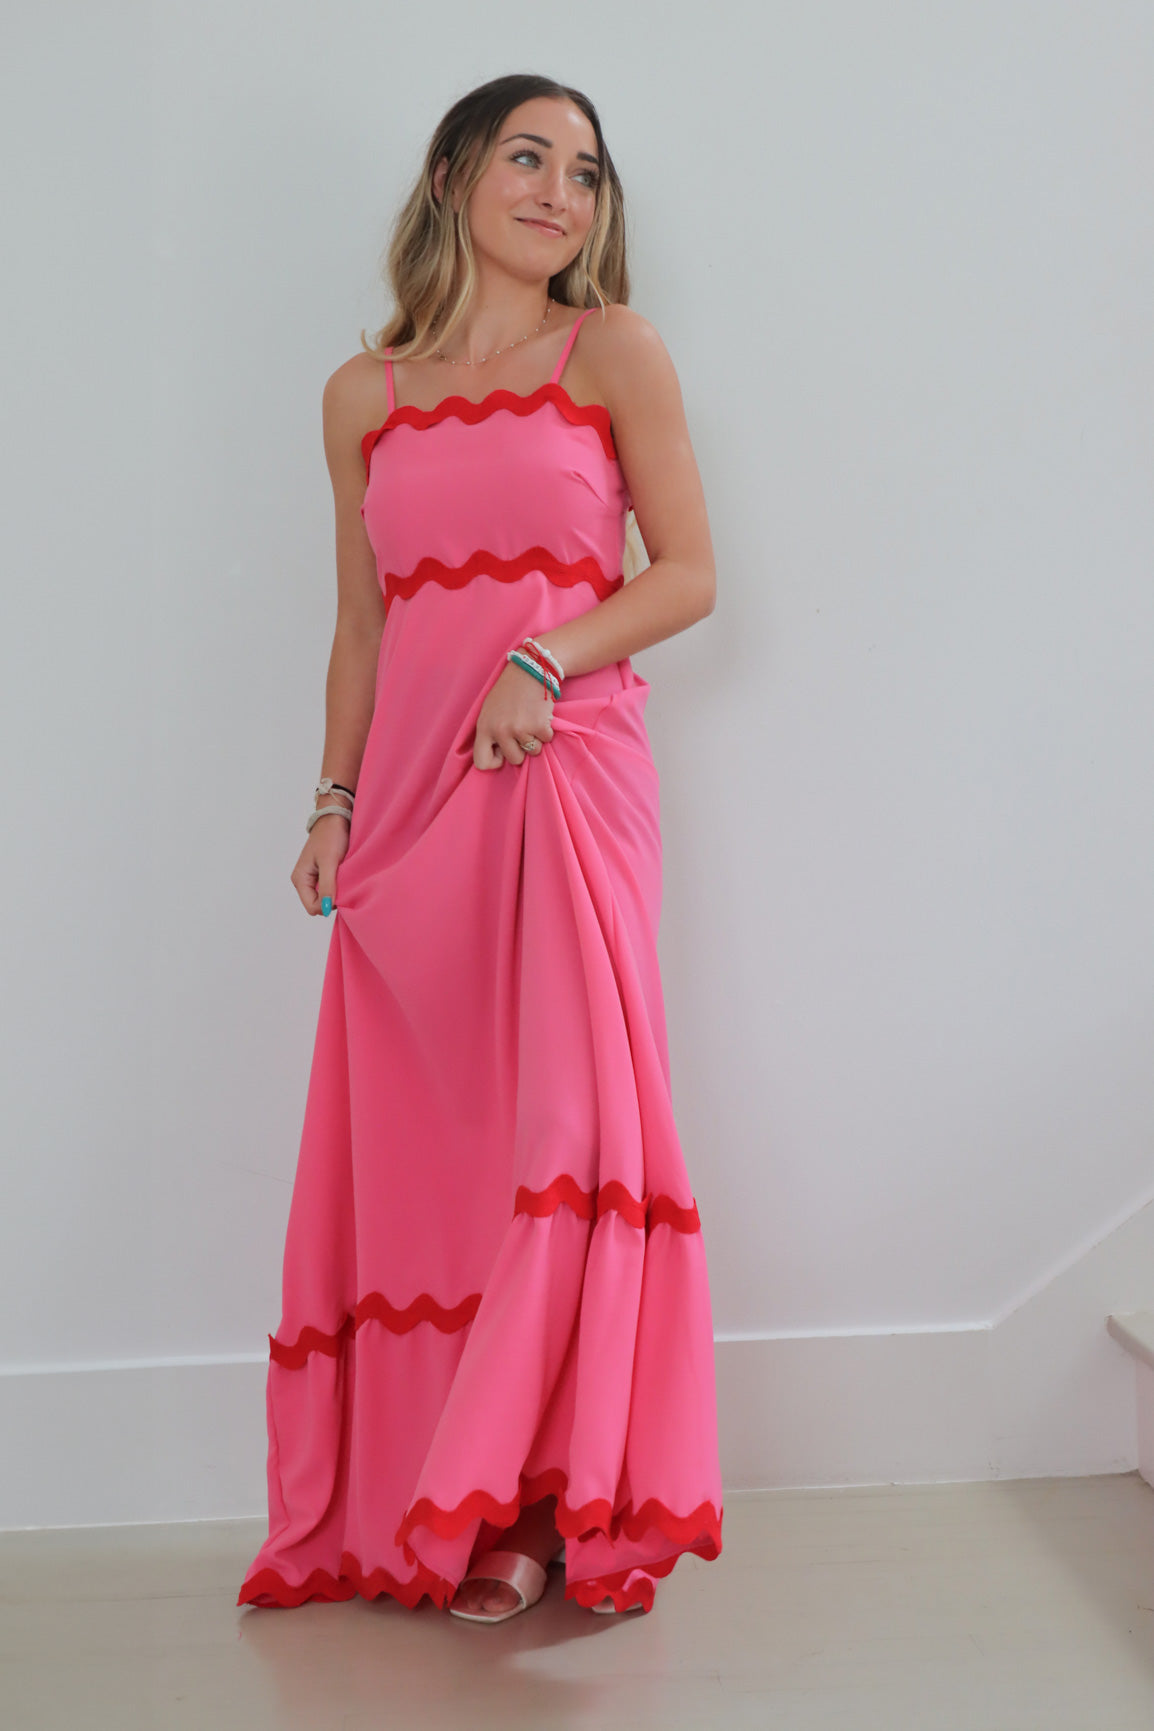 girl wearing pink long dress with chevron detailing